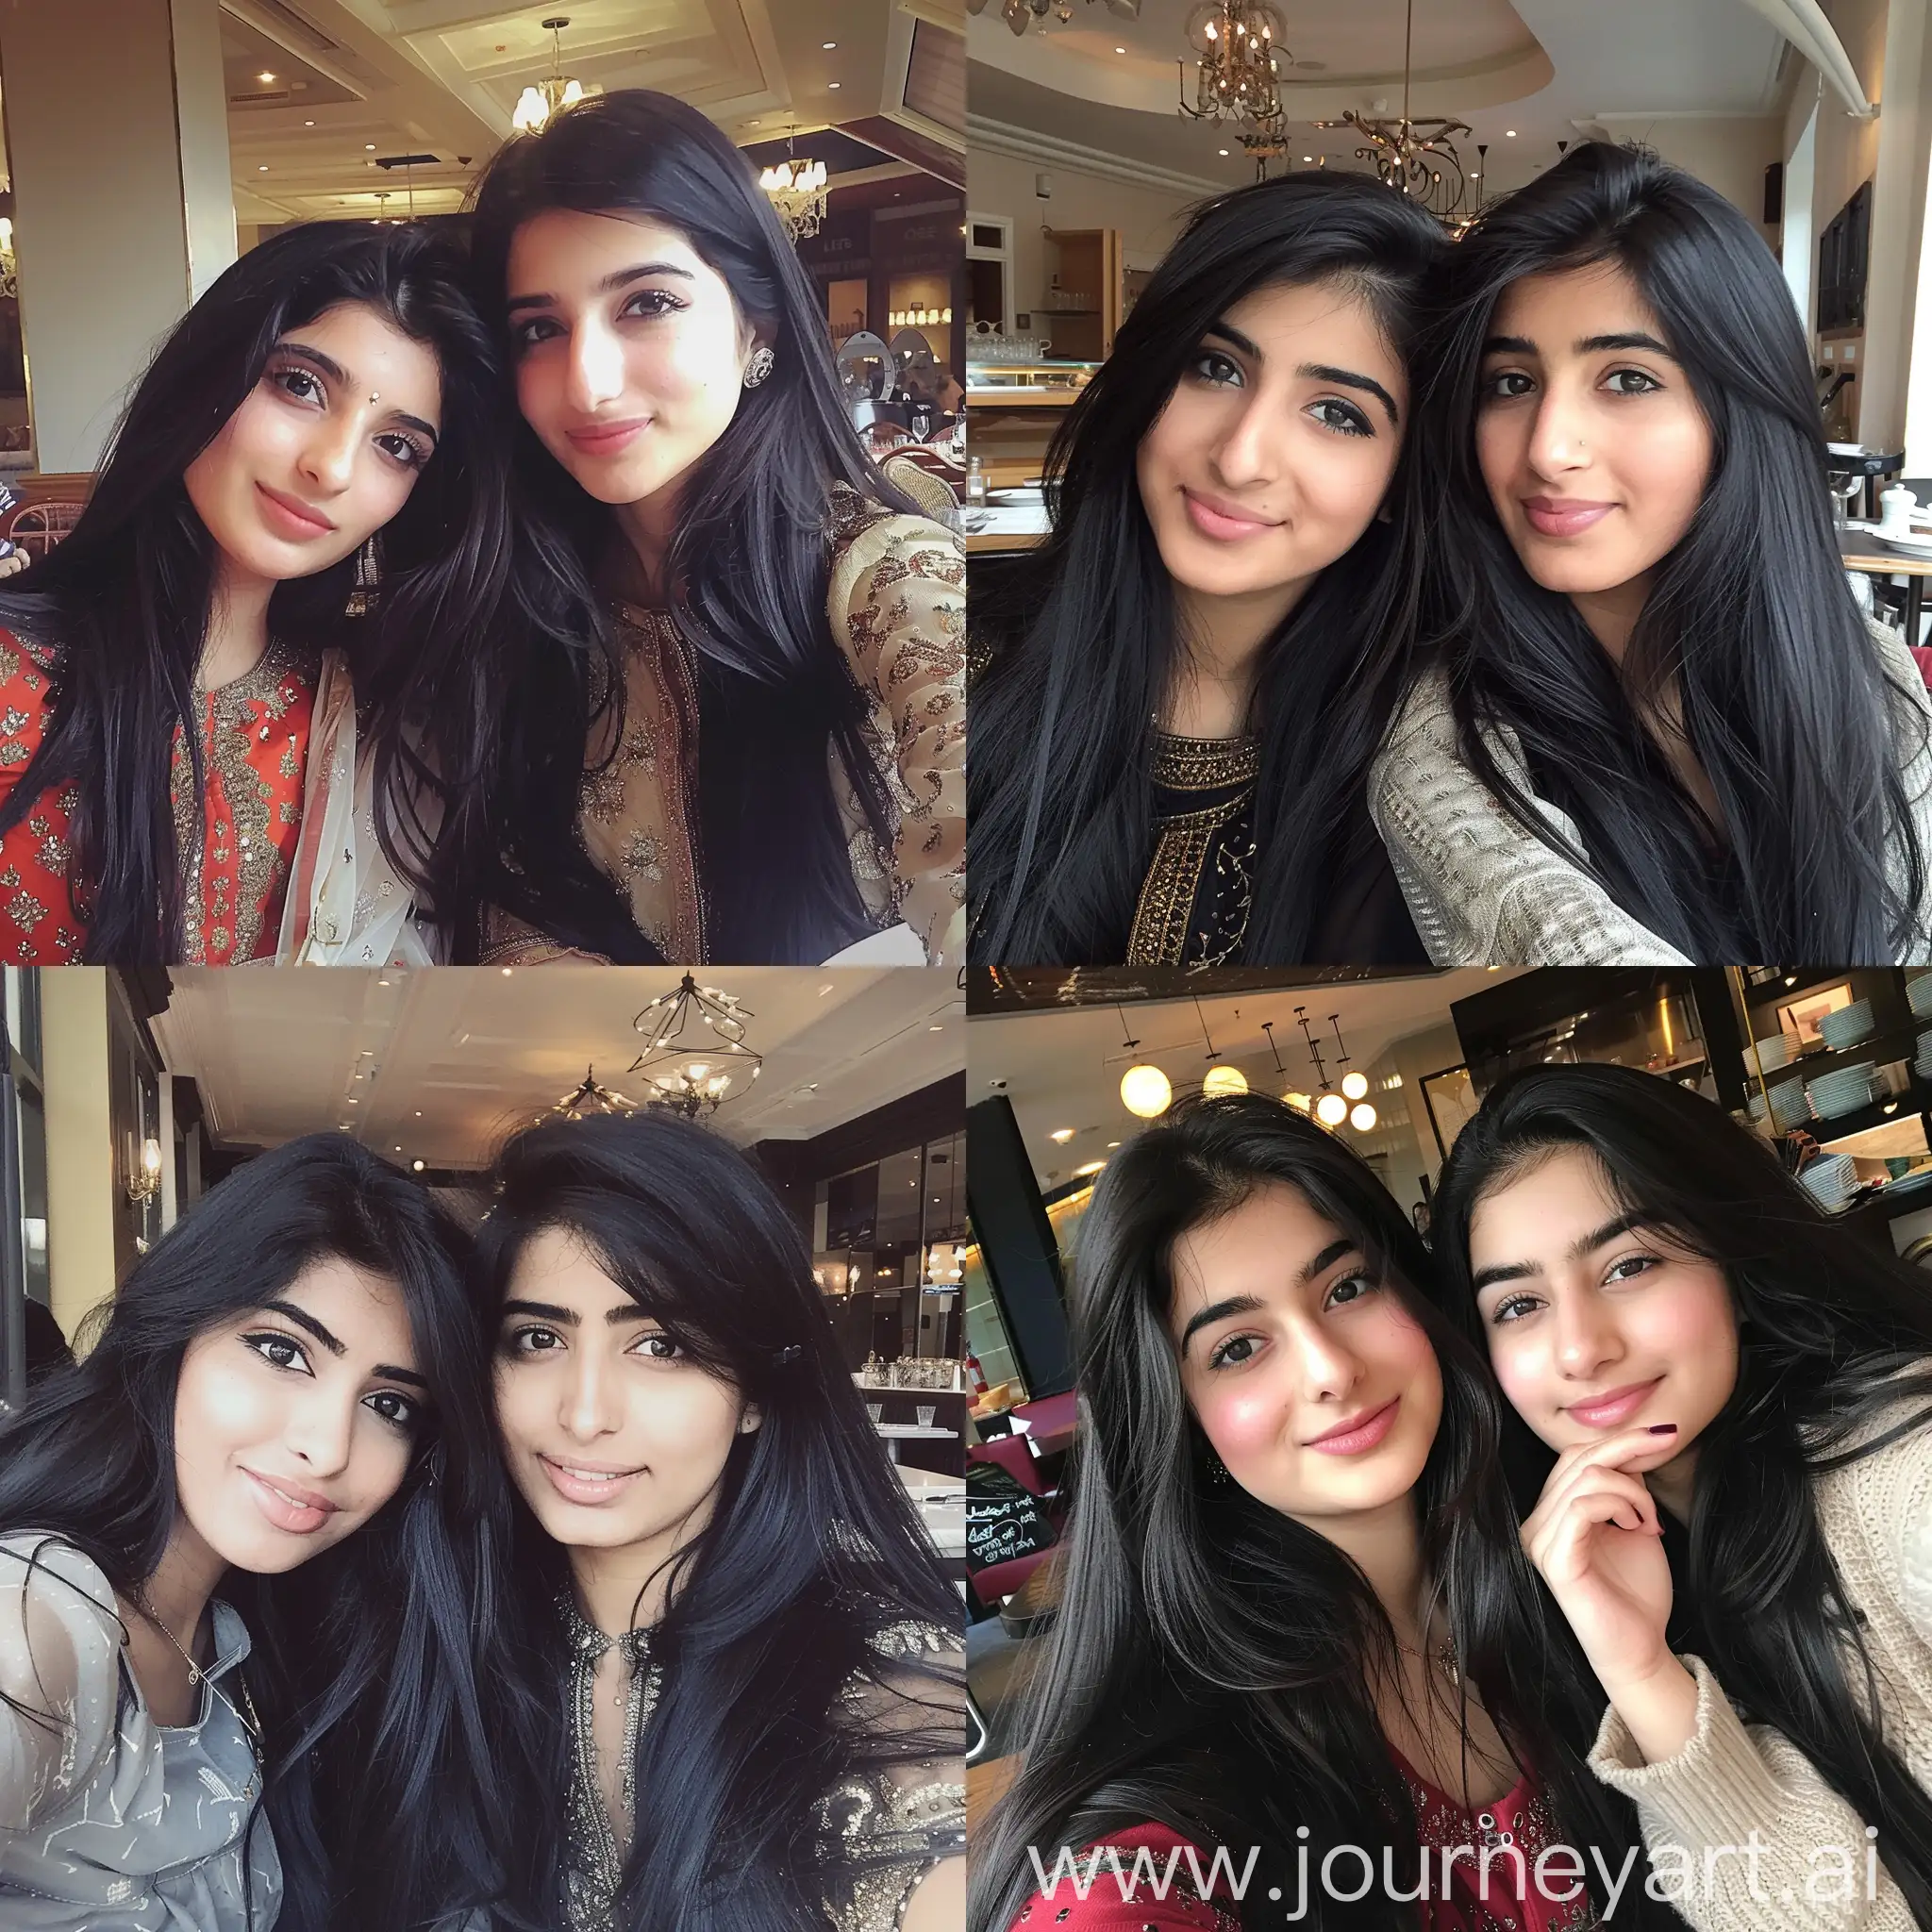 Stylish-British-Pakistani-Friends-Capturing-a-Selfie-Moment-in-Restaurant